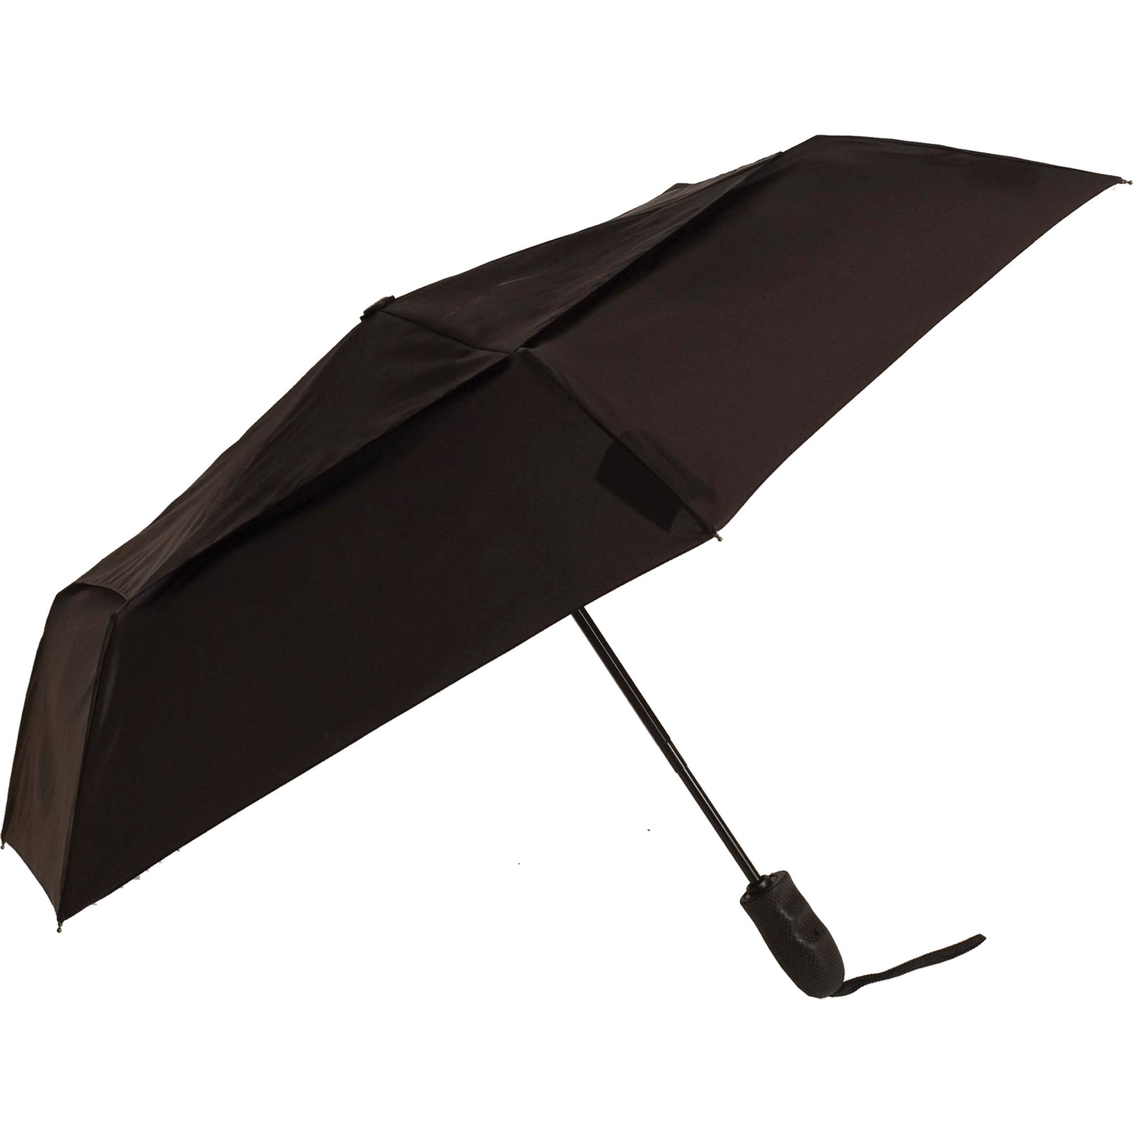 ShedRain Auto Open and Close Compact Umbrella - Image 1 of 2